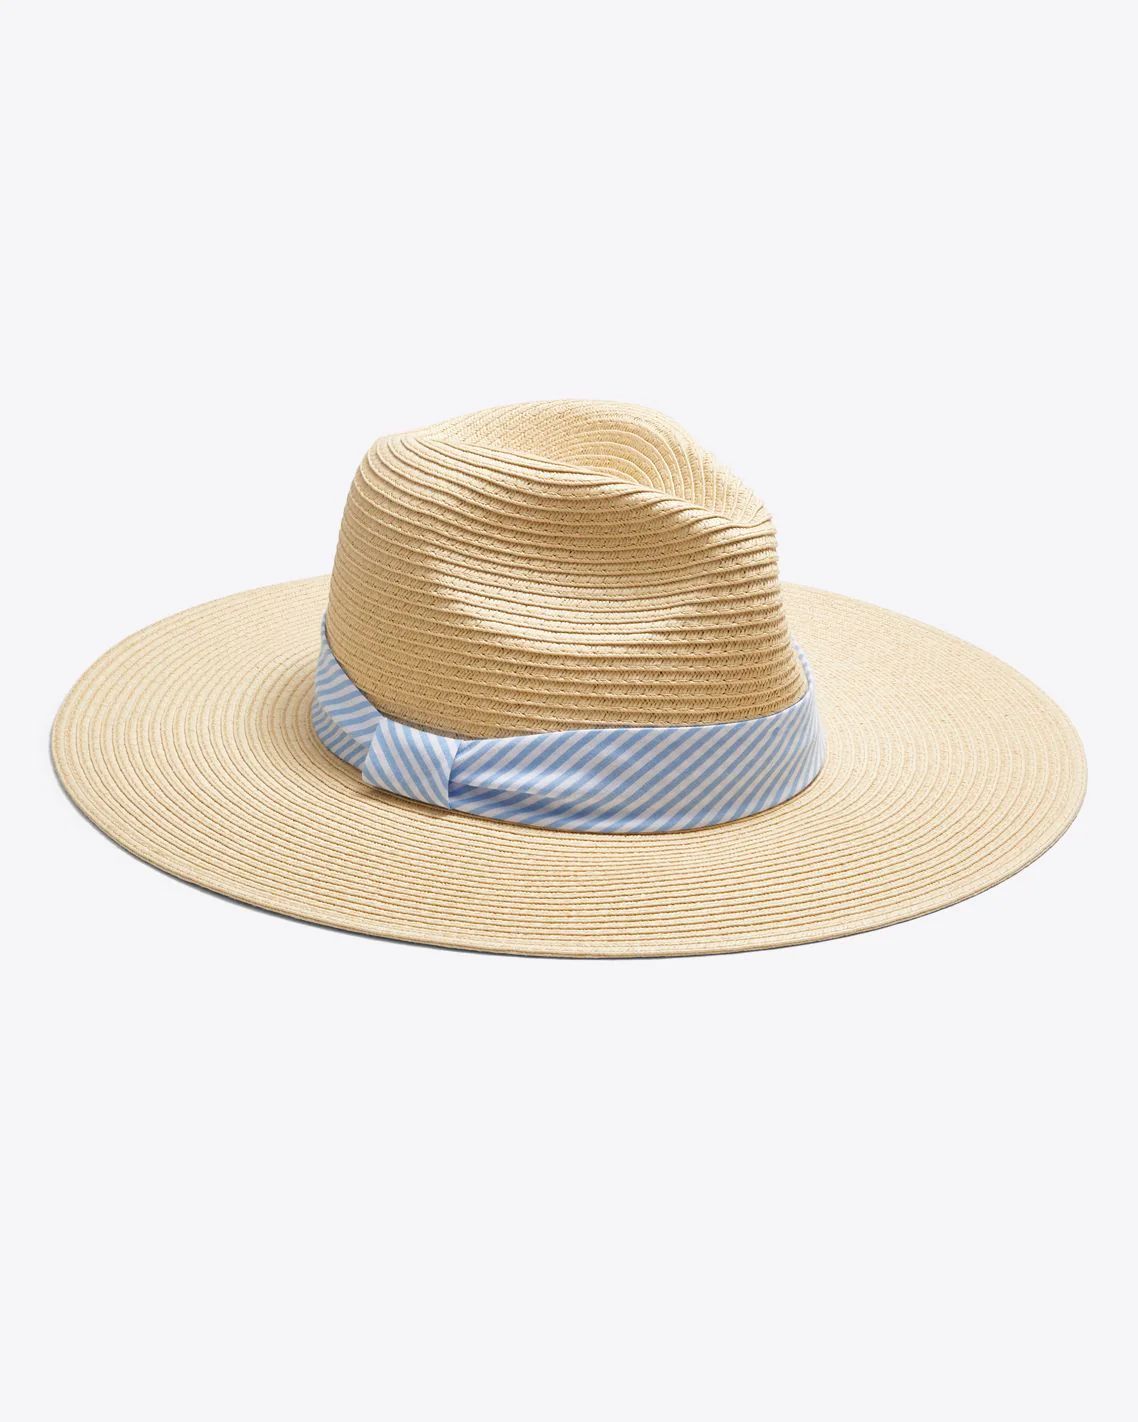 Straw Sun Hat With Tie | Draper James (US)